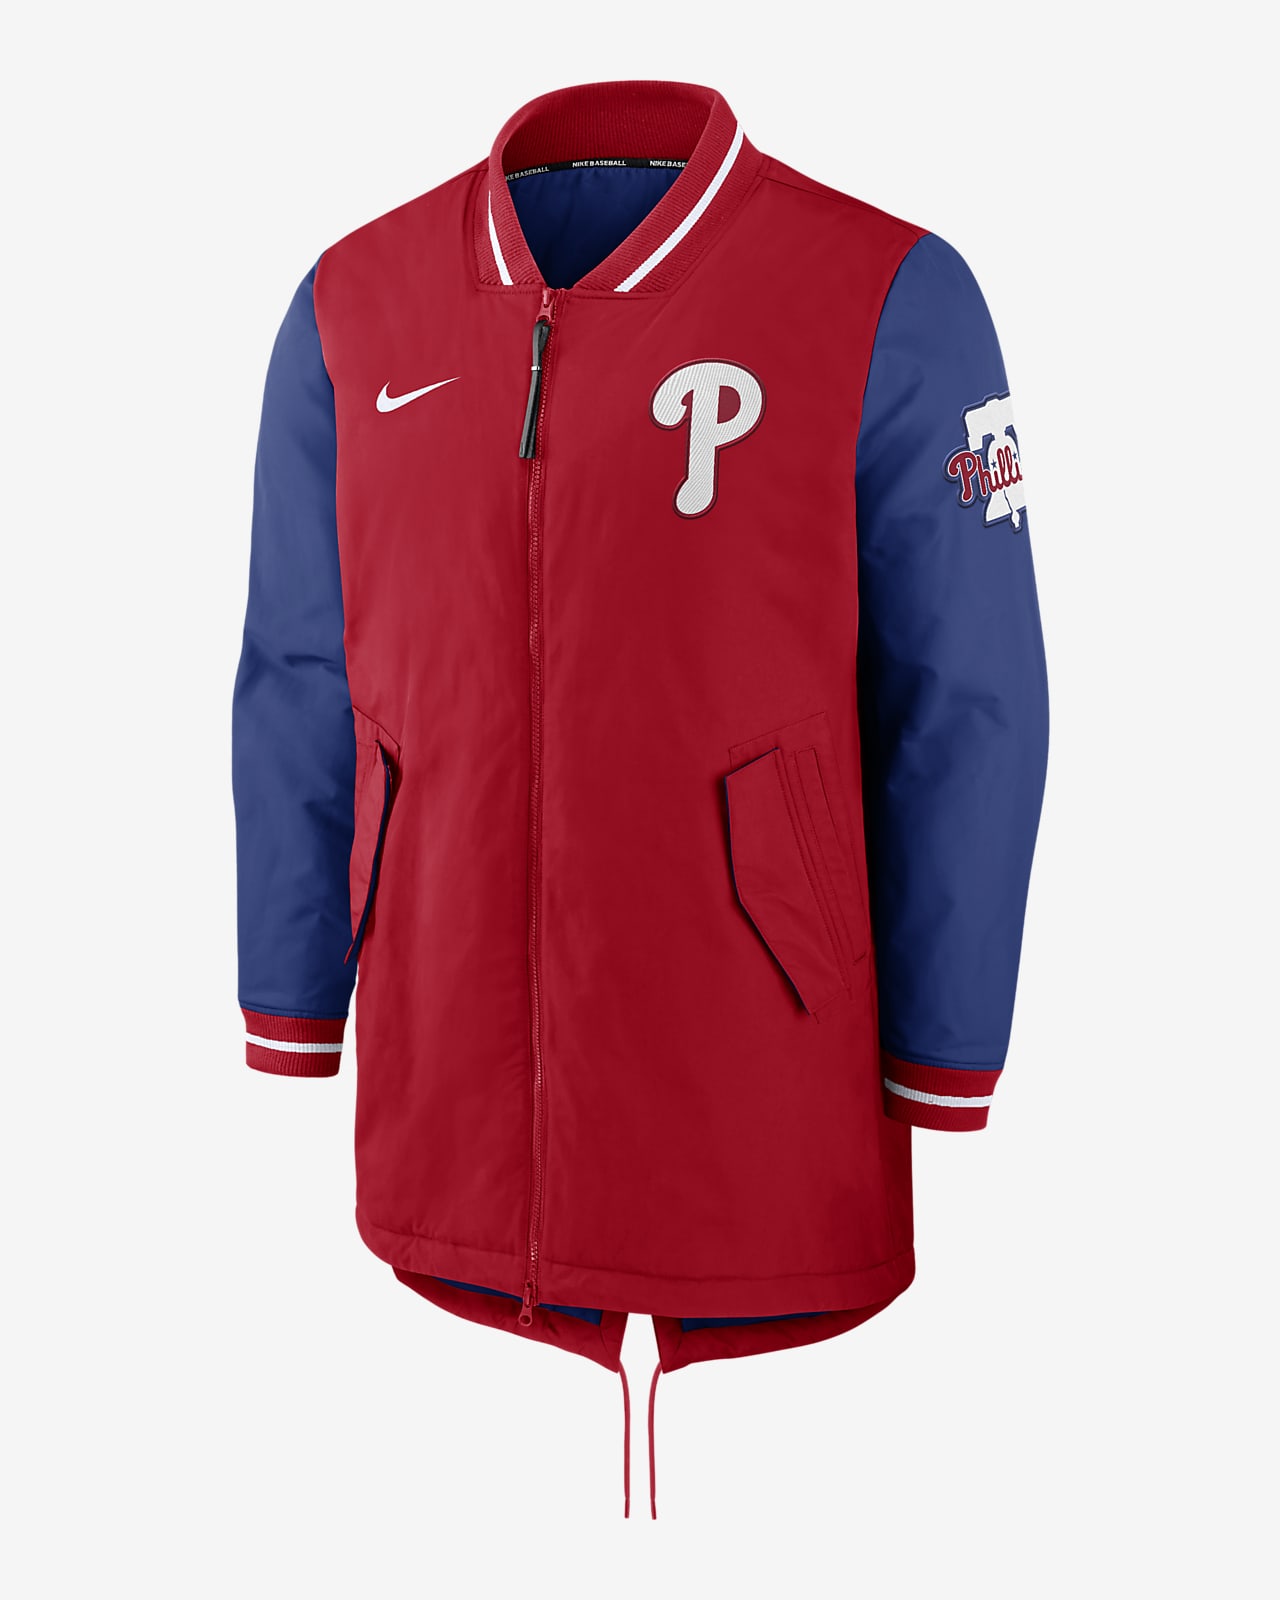 MLB Men's Bomber Jacket - Red - XL